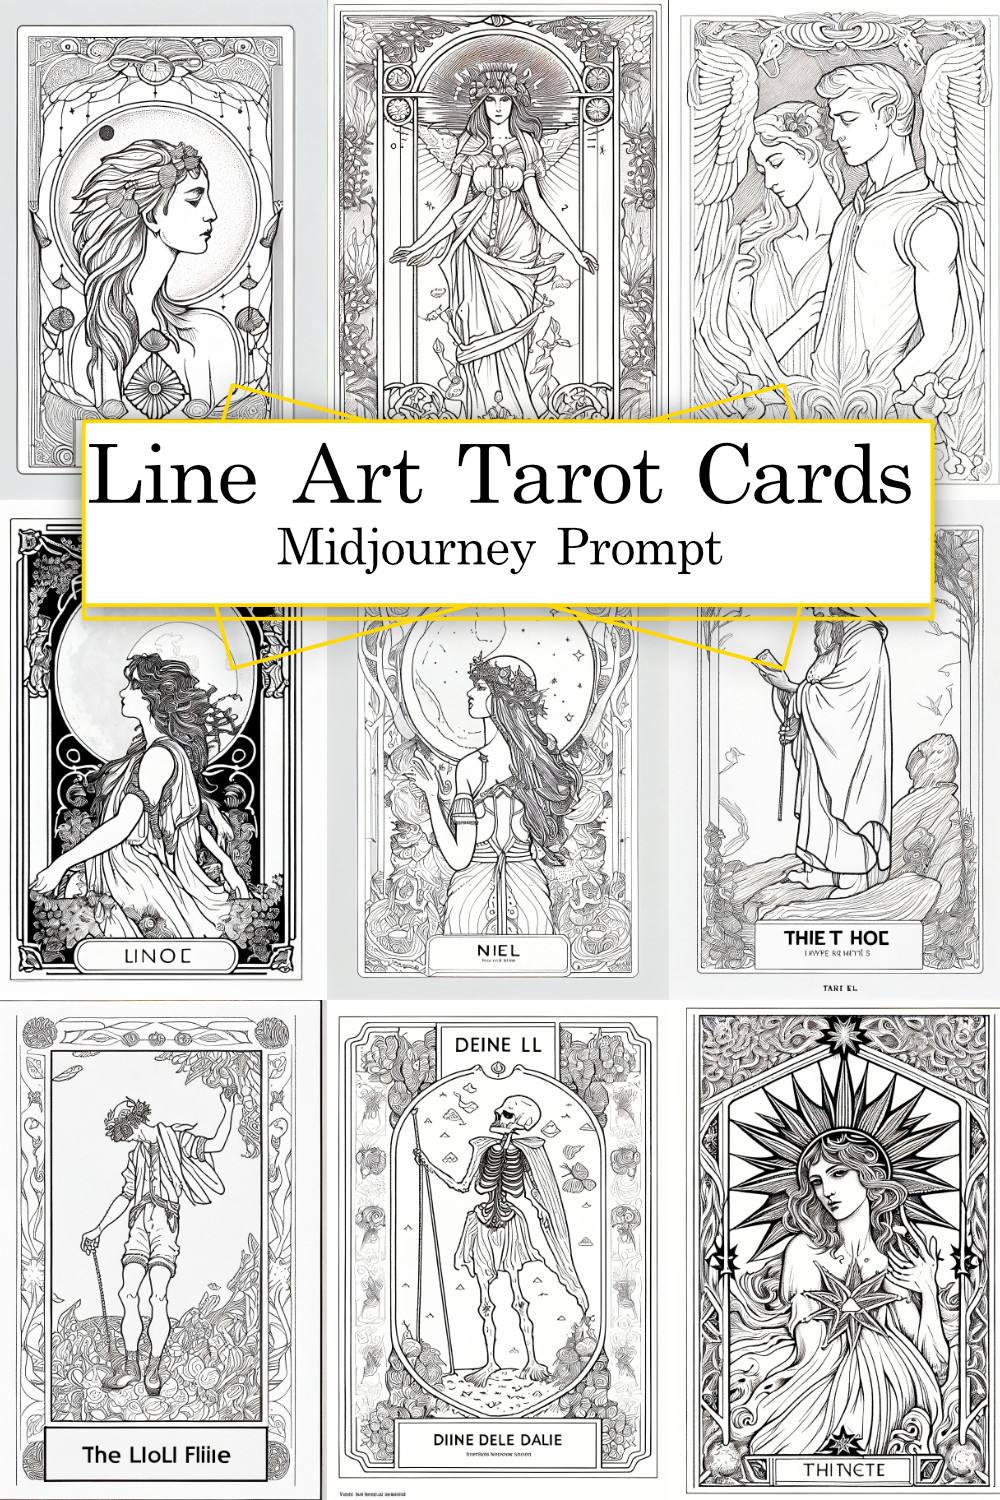 Line Art Tarot Card Designs Midjourney Prompt pinterest preview image.